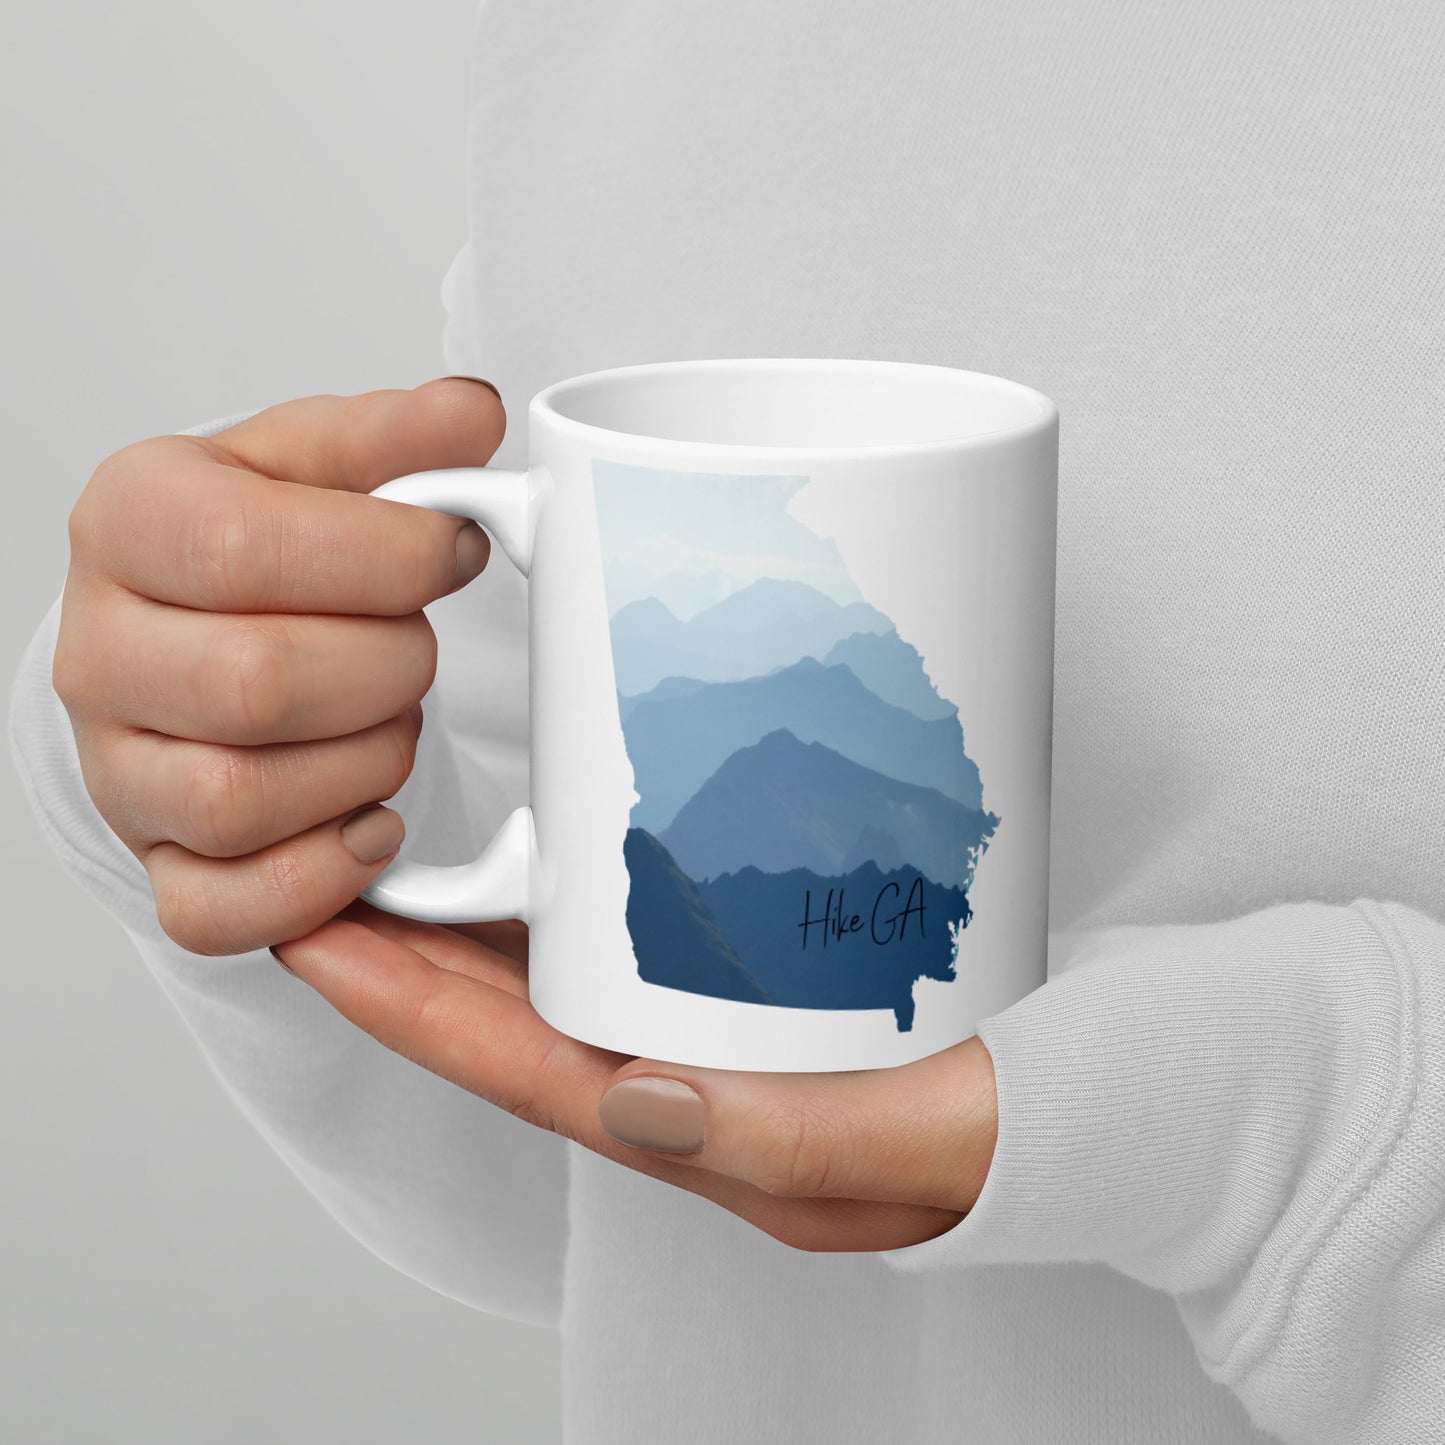 Hike GA (Georgia State) - White glossy mug